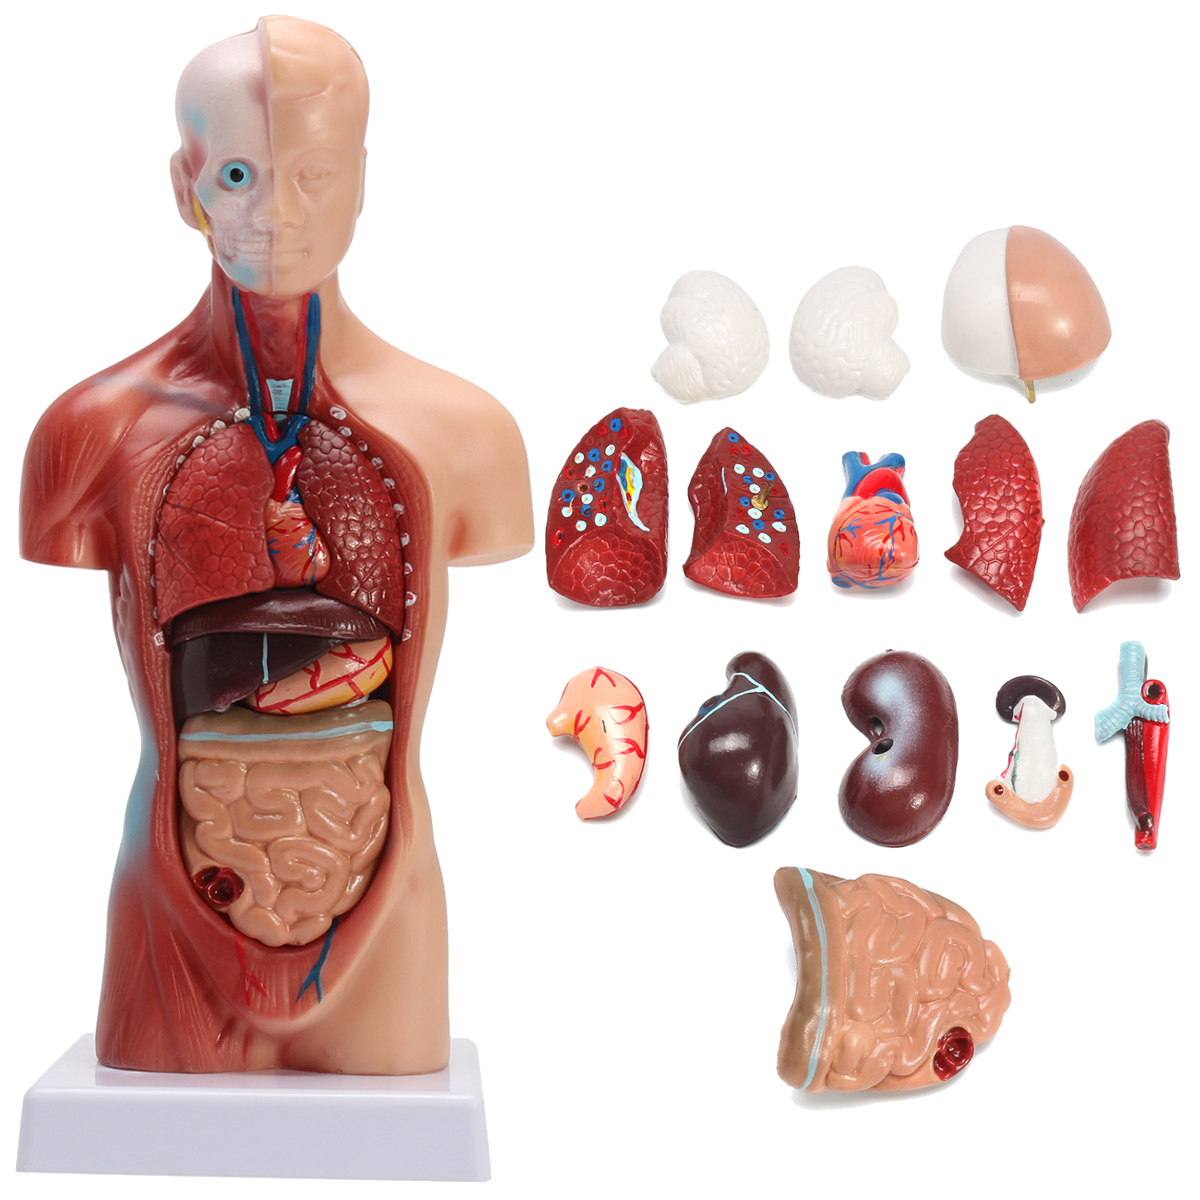 

STEM Human Torso Body Anatomy Medical Model Heart Brain Skeleton Medical School Educational